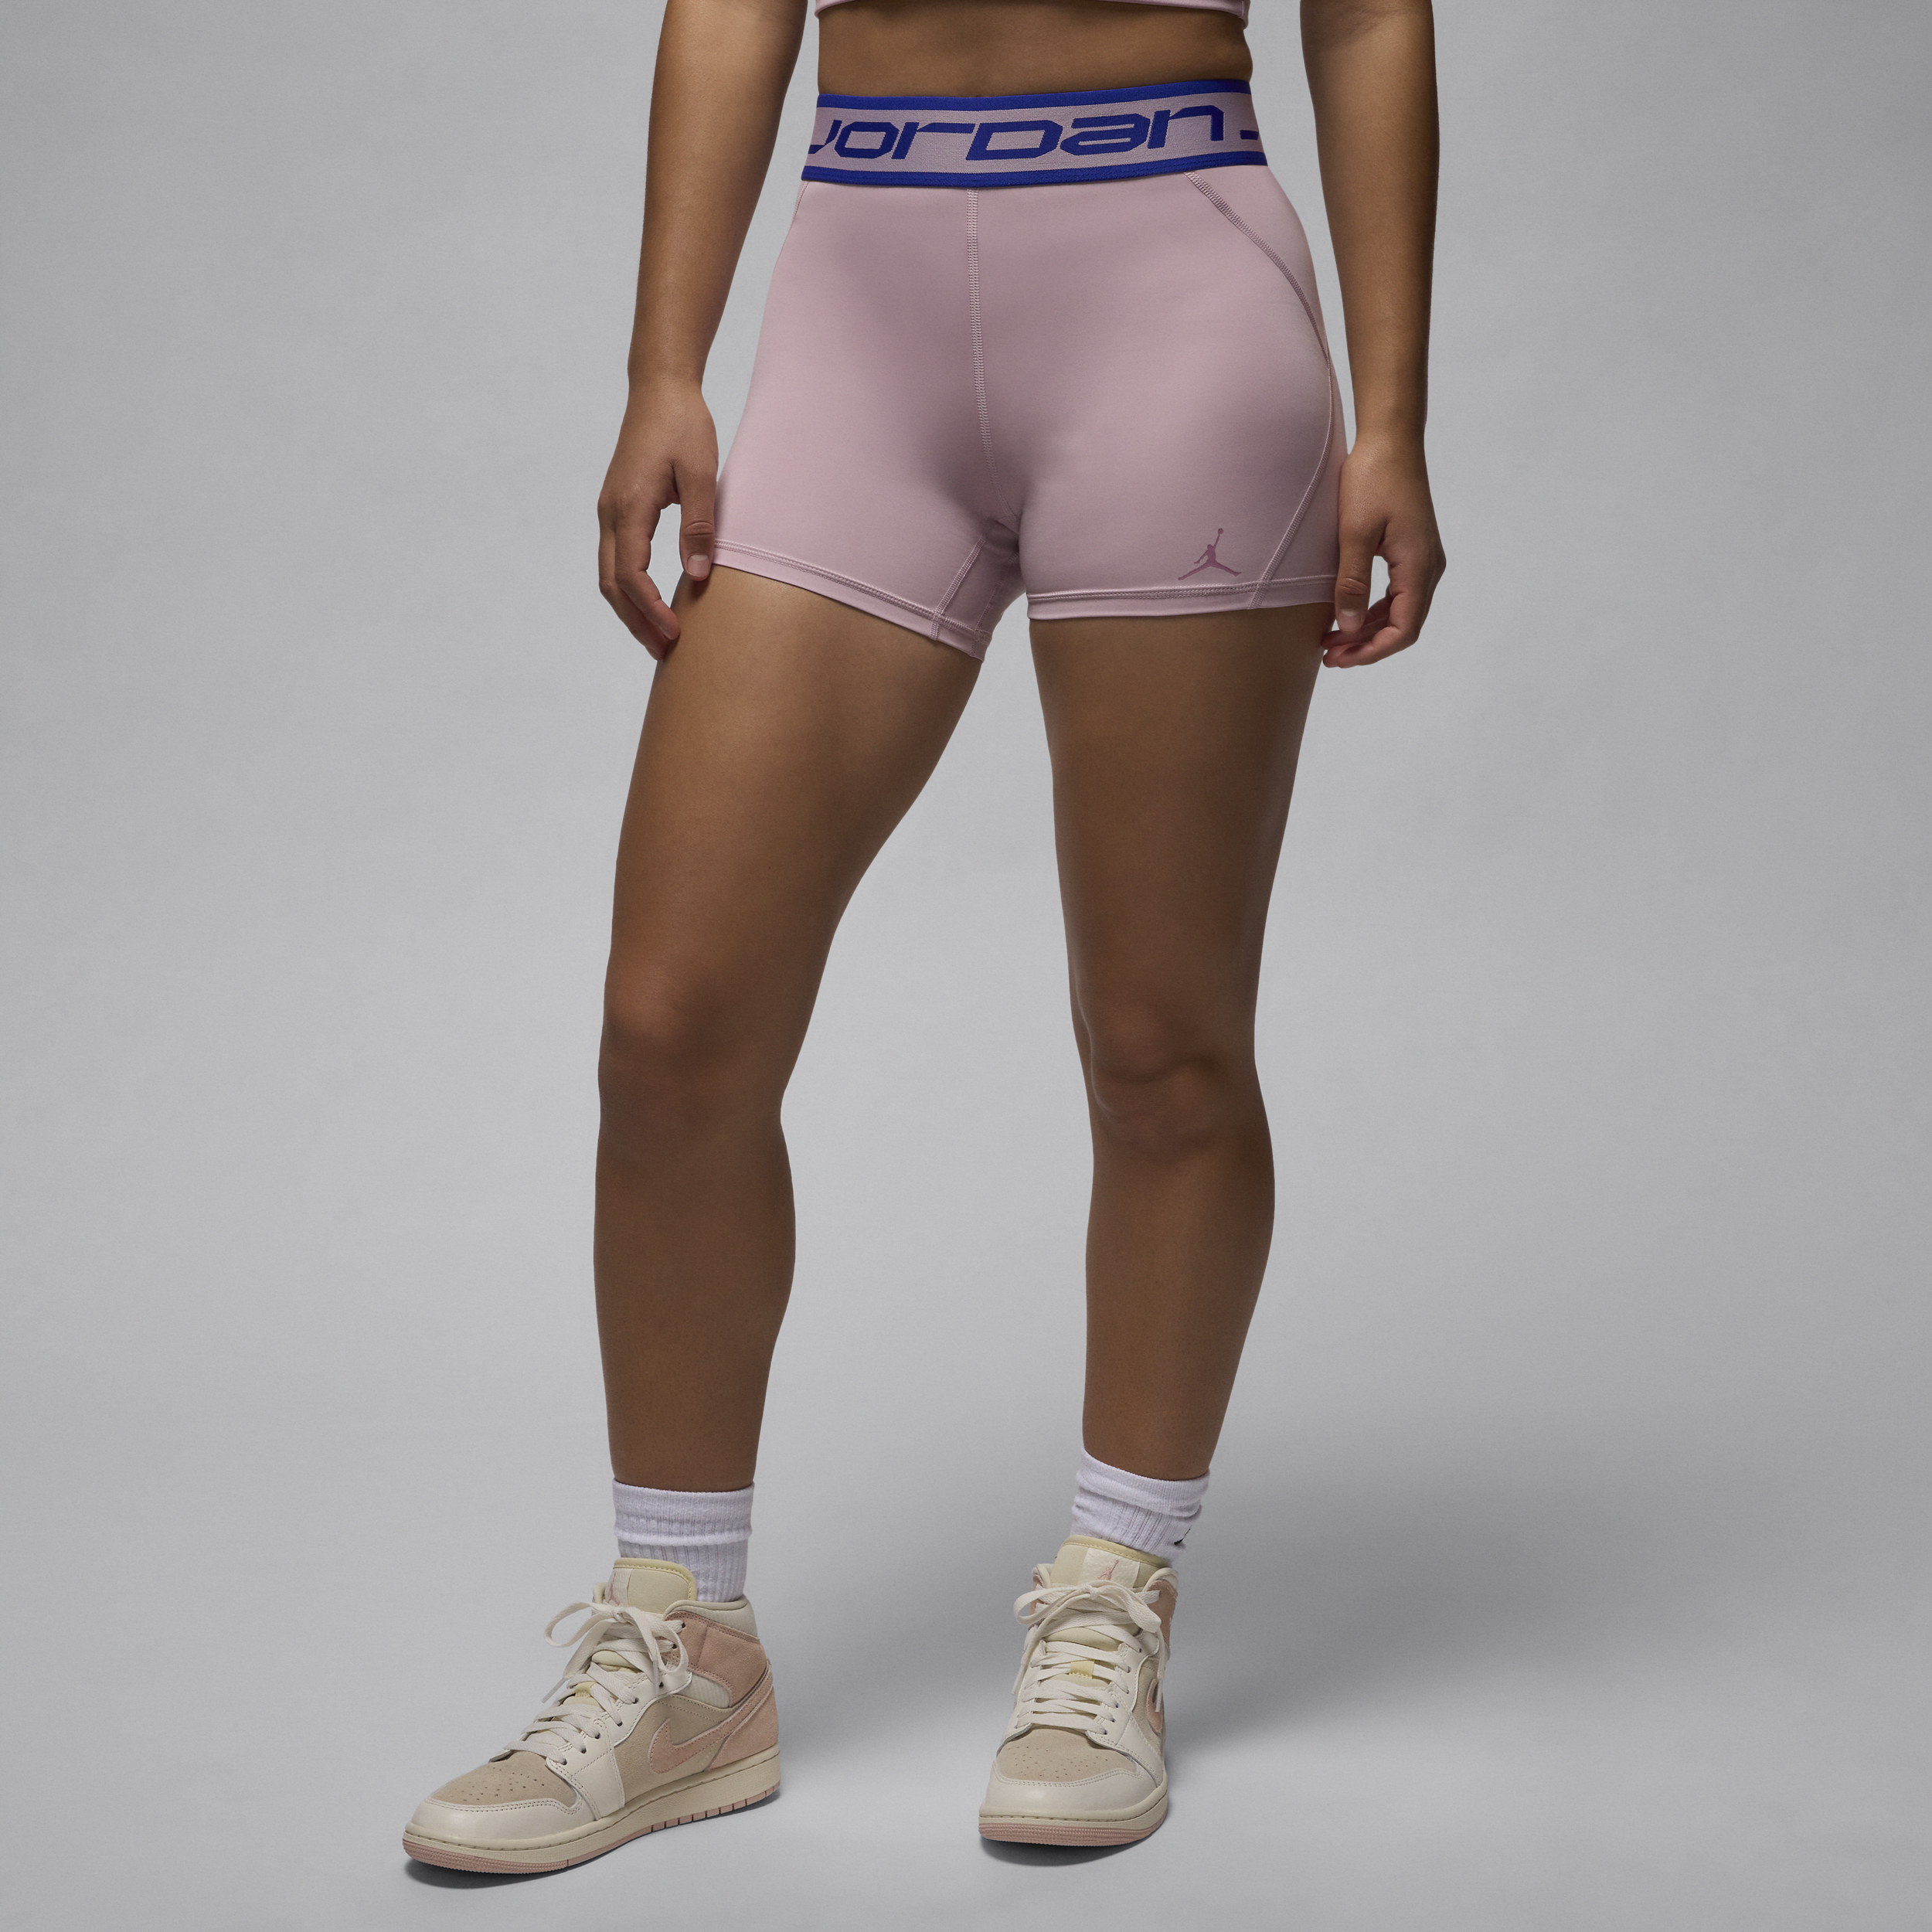 Jordan Sport Pantalón corto de 13 cm - Mujer - Morado